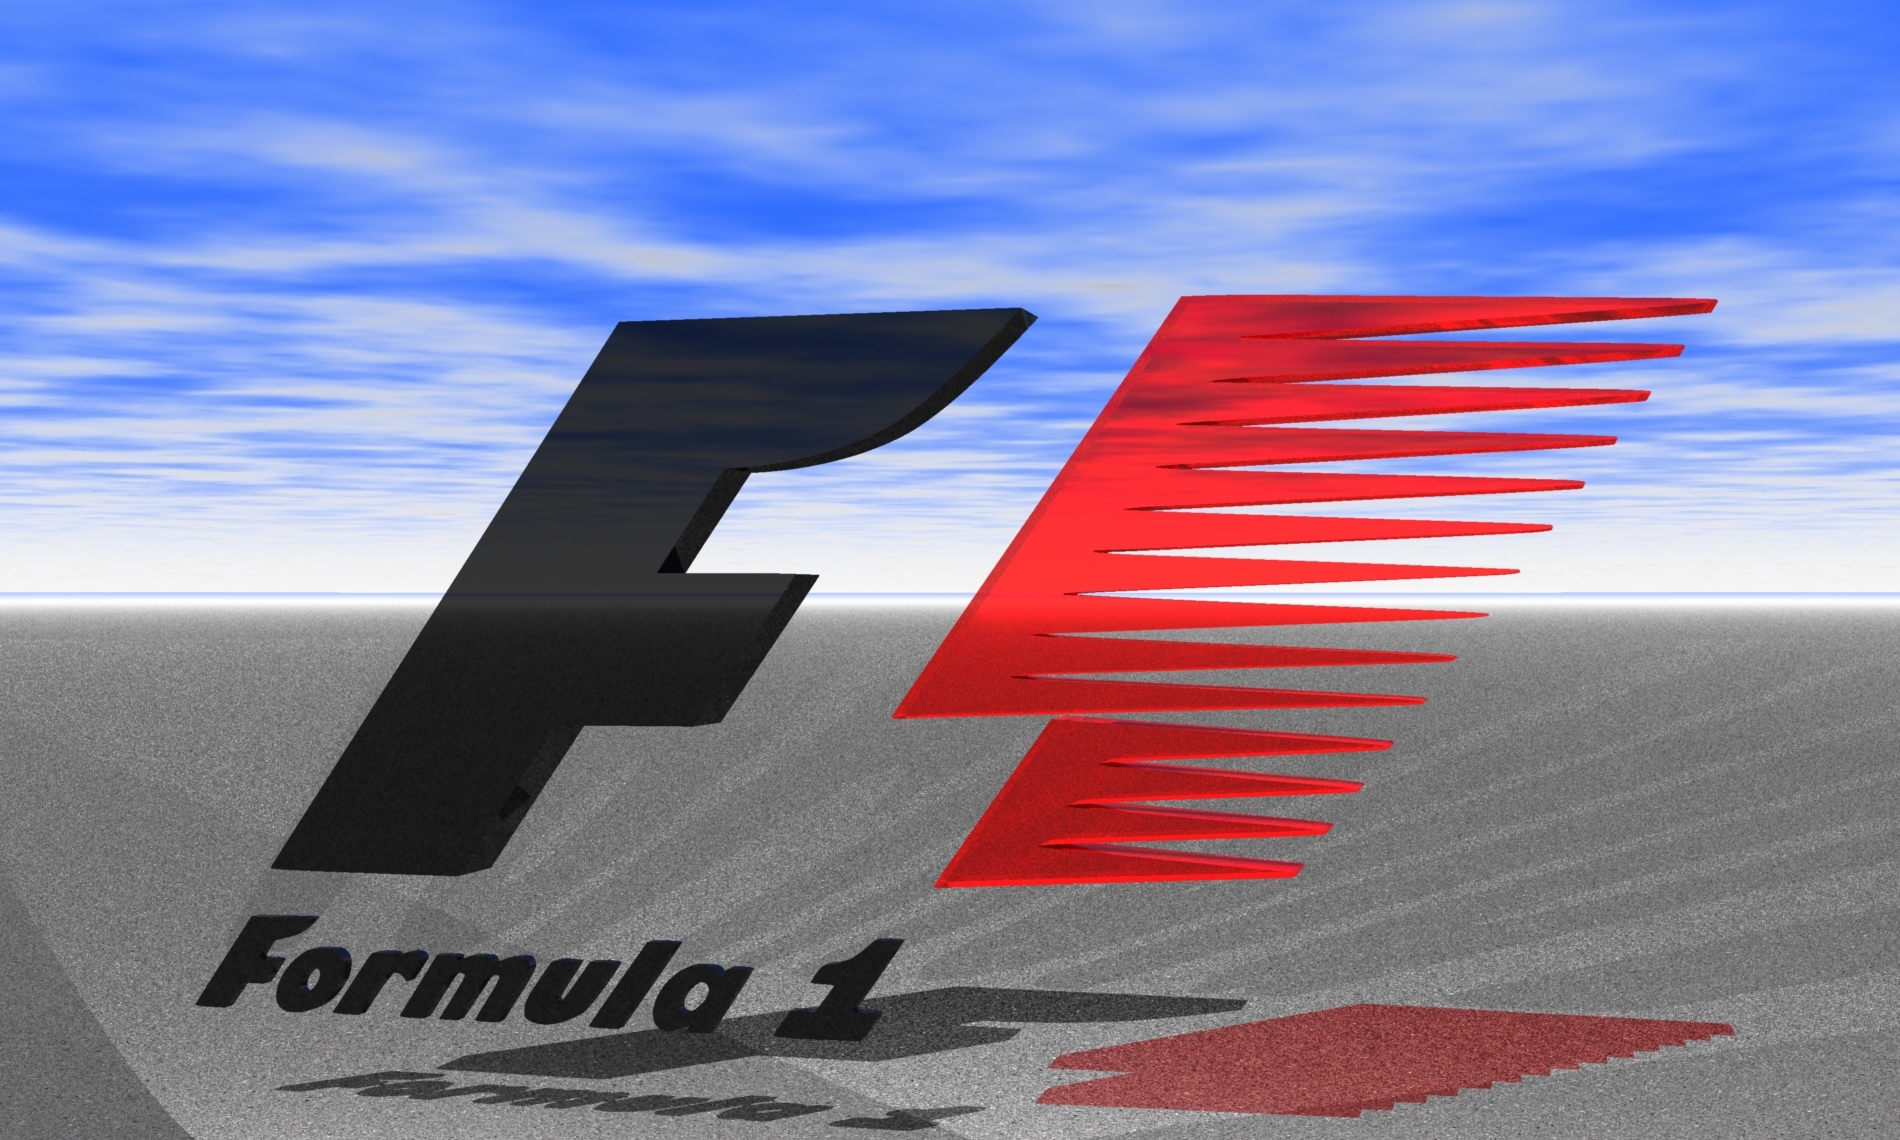 New Formula Wallpaper HD Imagebank Biz